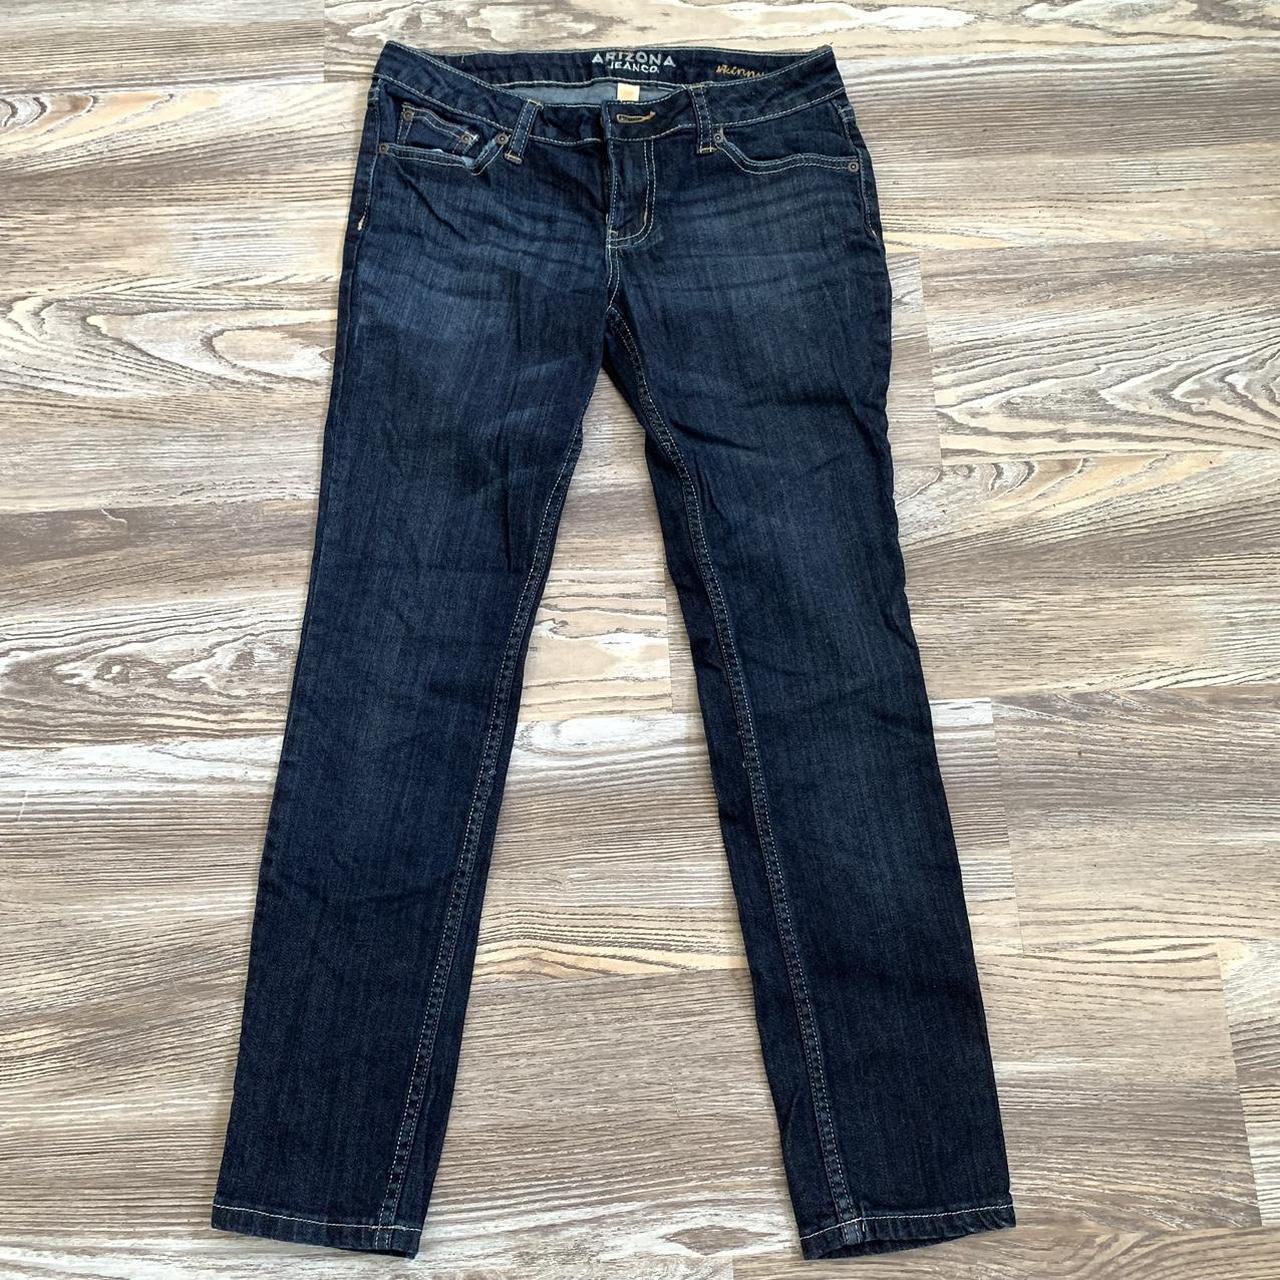 size skinny - jeans! Arizona Depop Dark 7 denim, blue short....